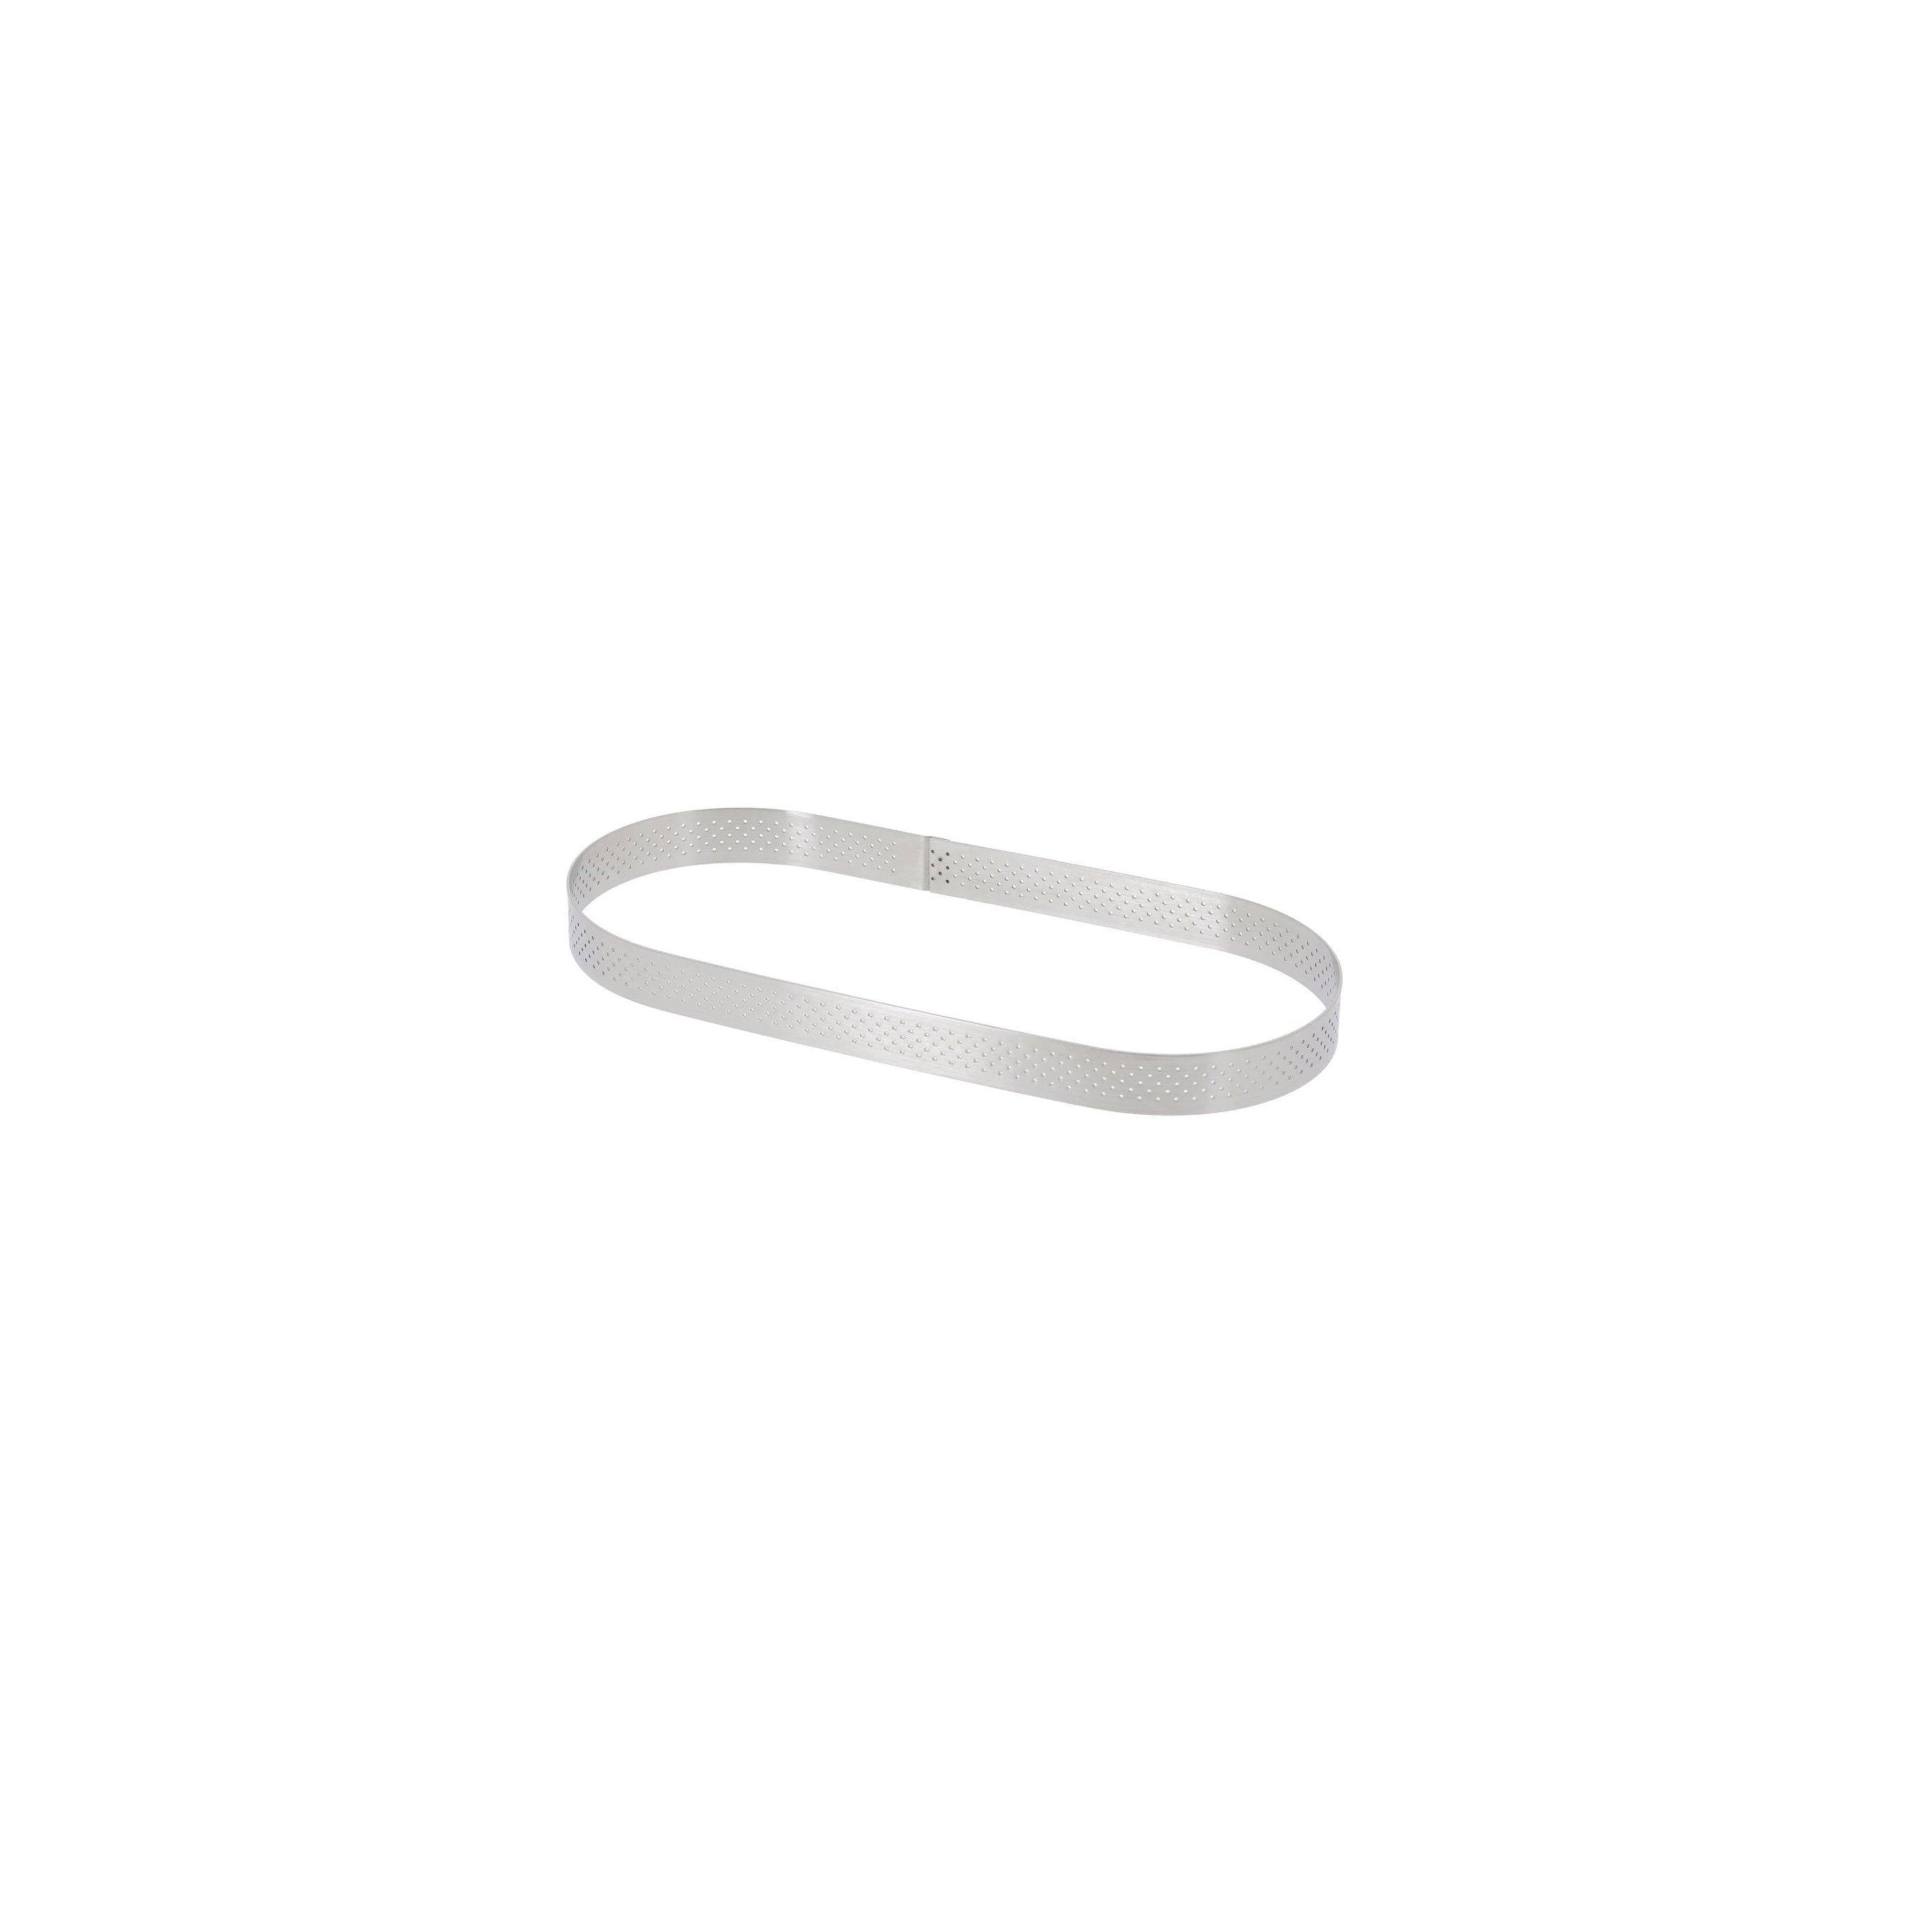 DE BUYER S/S Perforated Oblong Tart Ring, 5.5